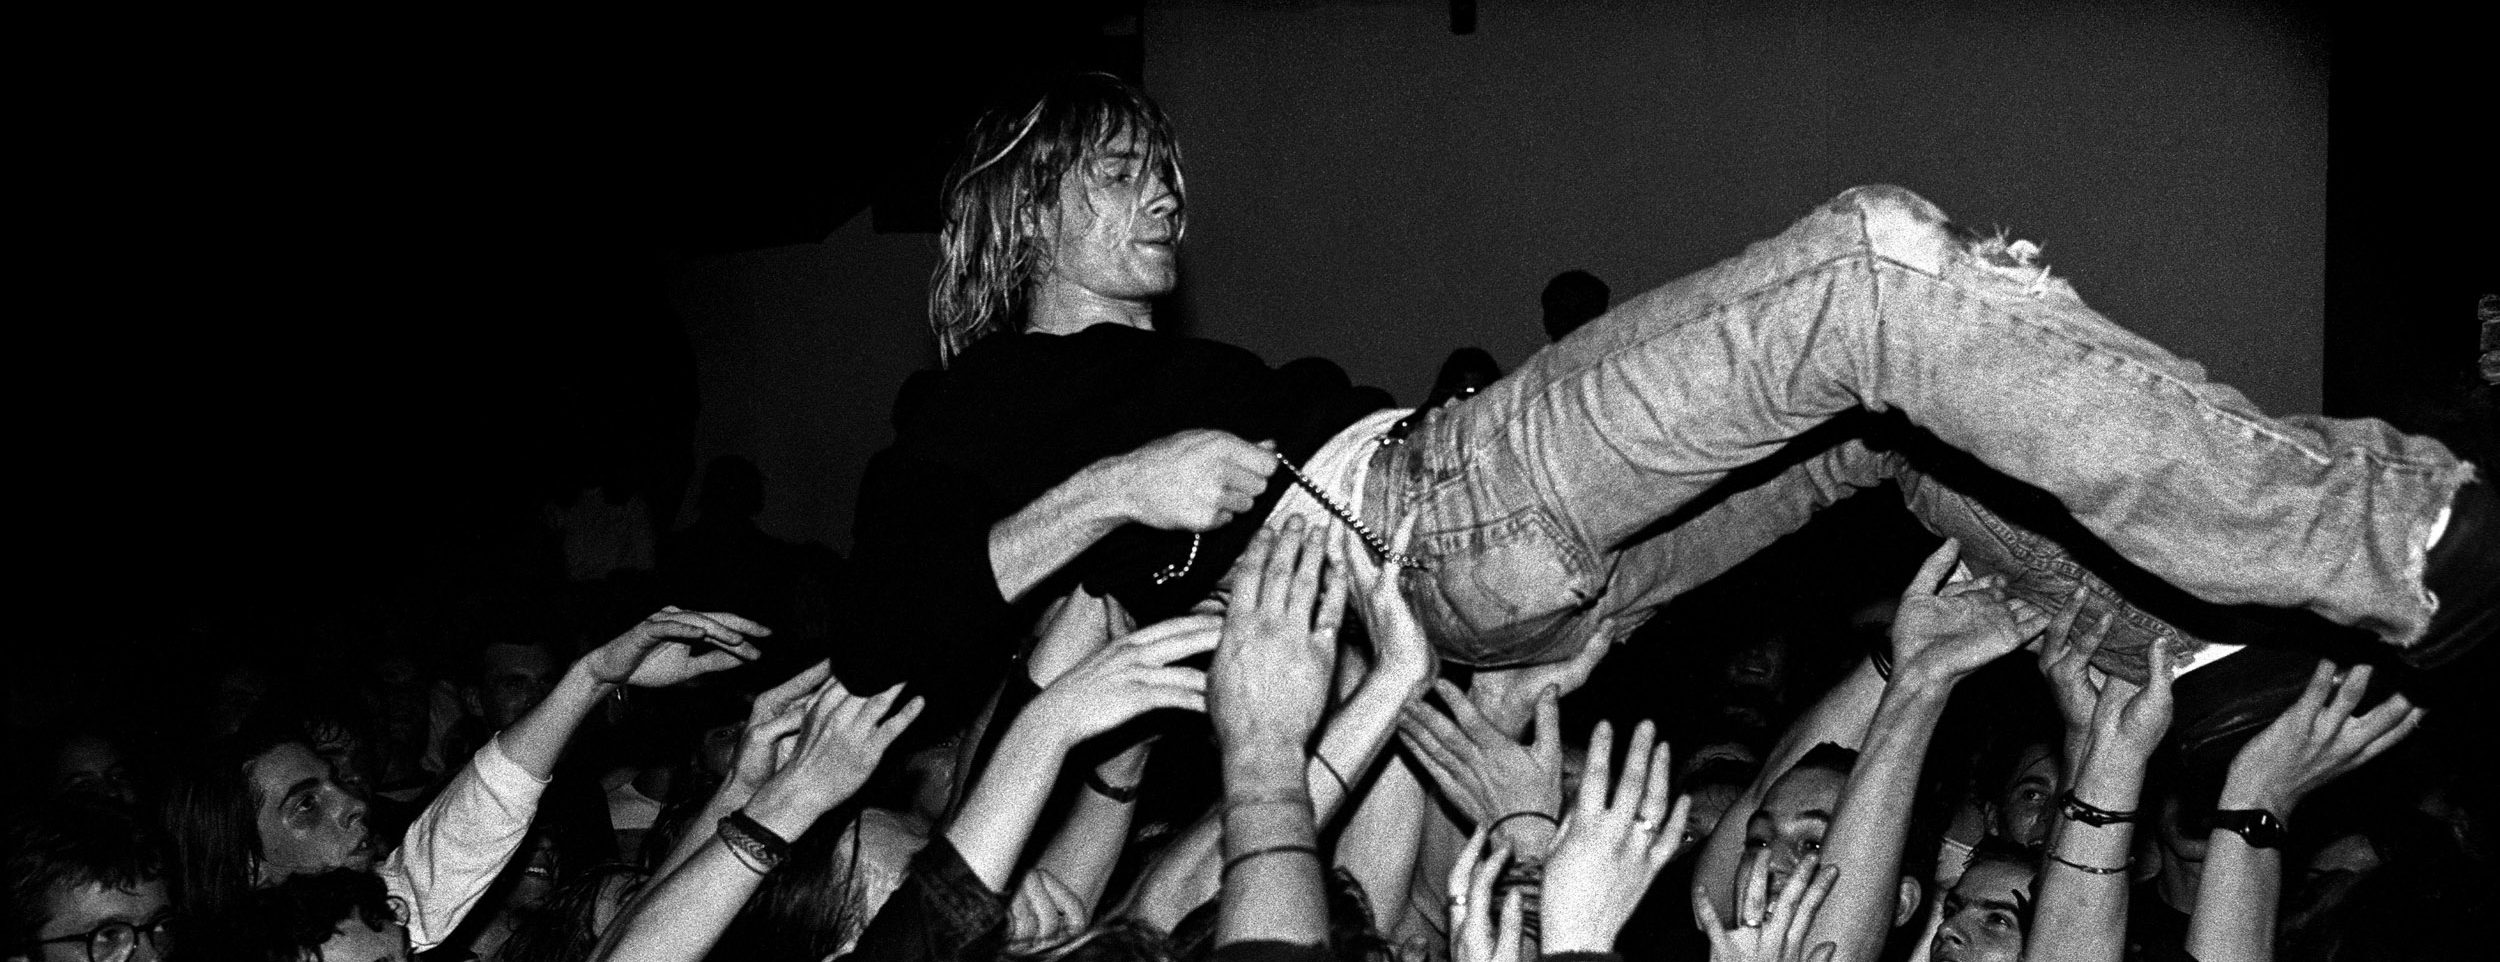 Nirvana singer Kurt Cobain performs in Frankfurt, Germany on November 12 1991. (Photo by Paul Bergen/Redferns)